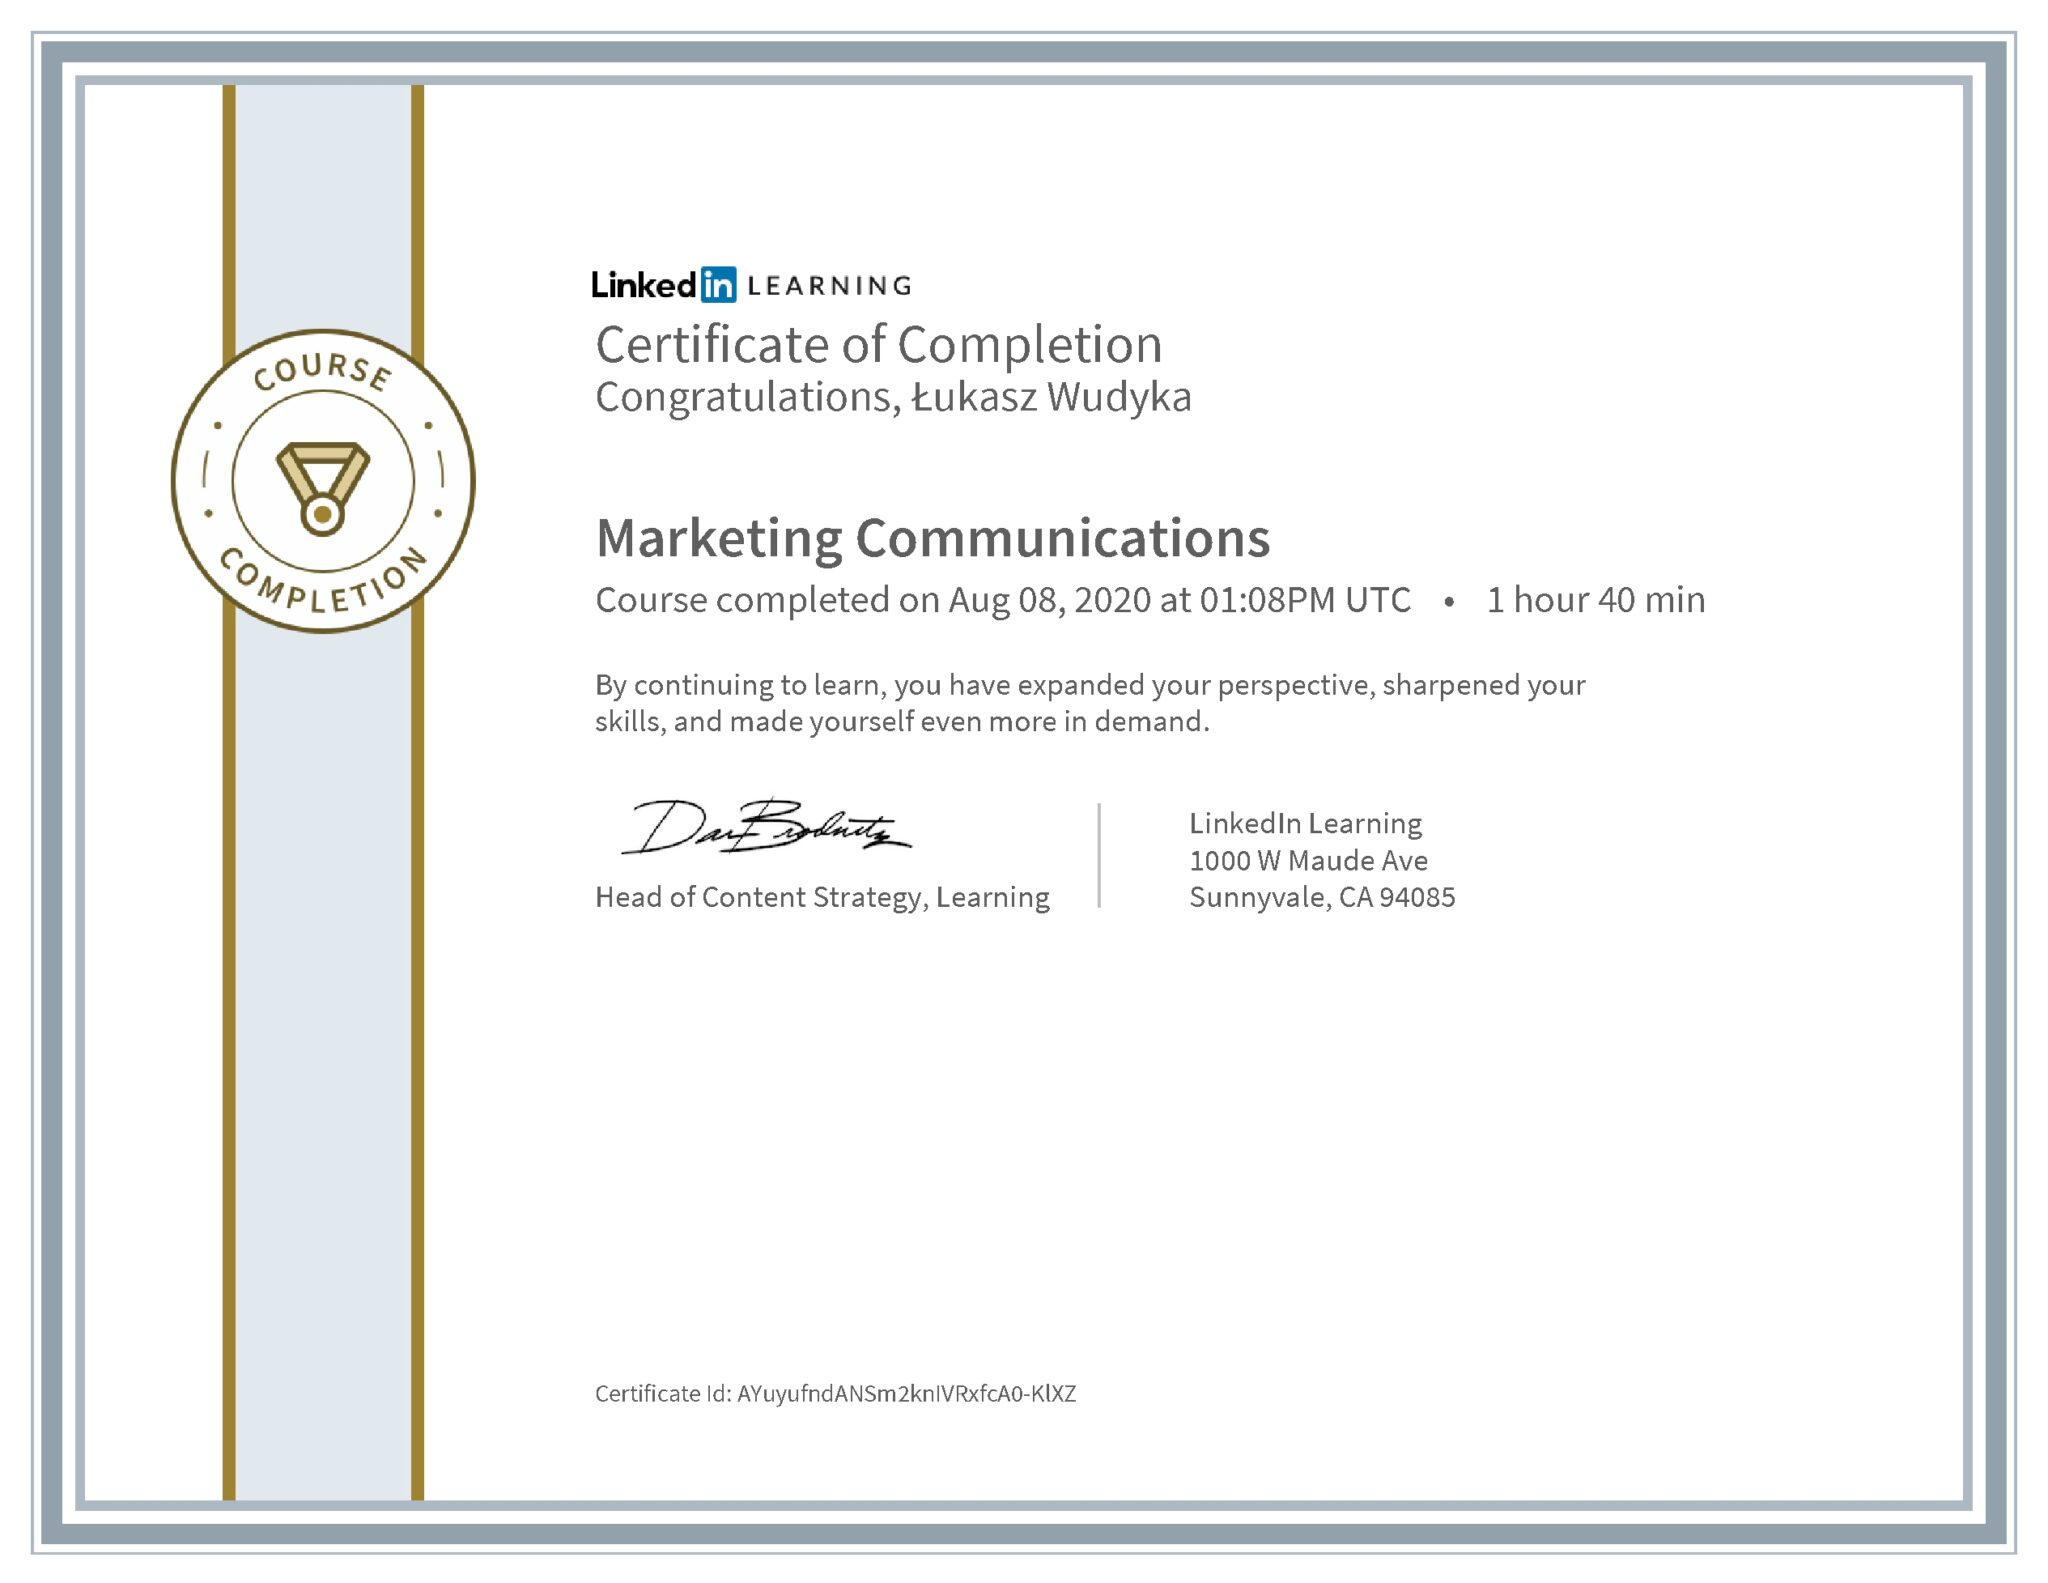 Łukasz Wudyka certyfikat LinkedIn Marketing Communications